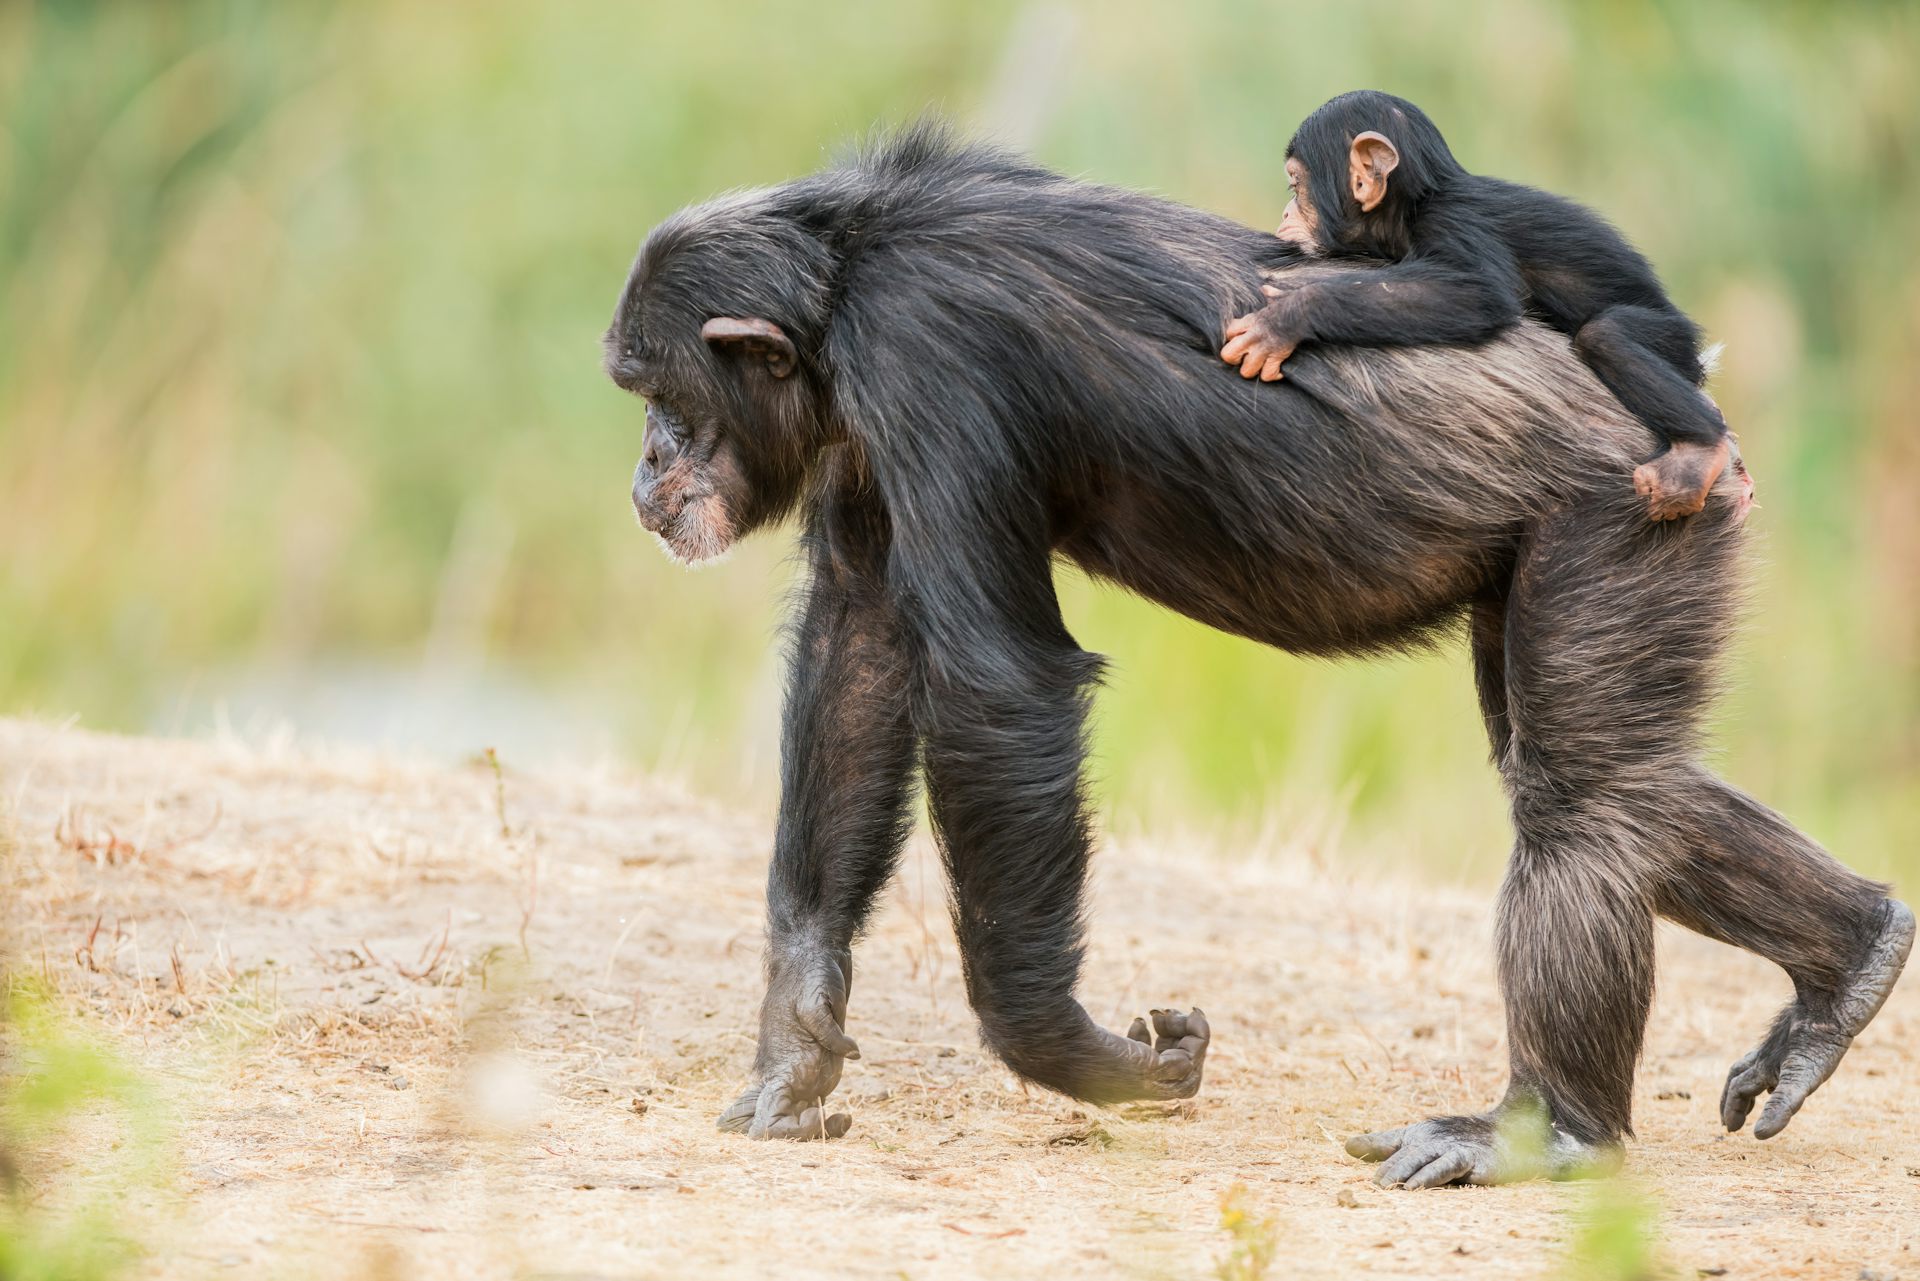 chimpanzee size